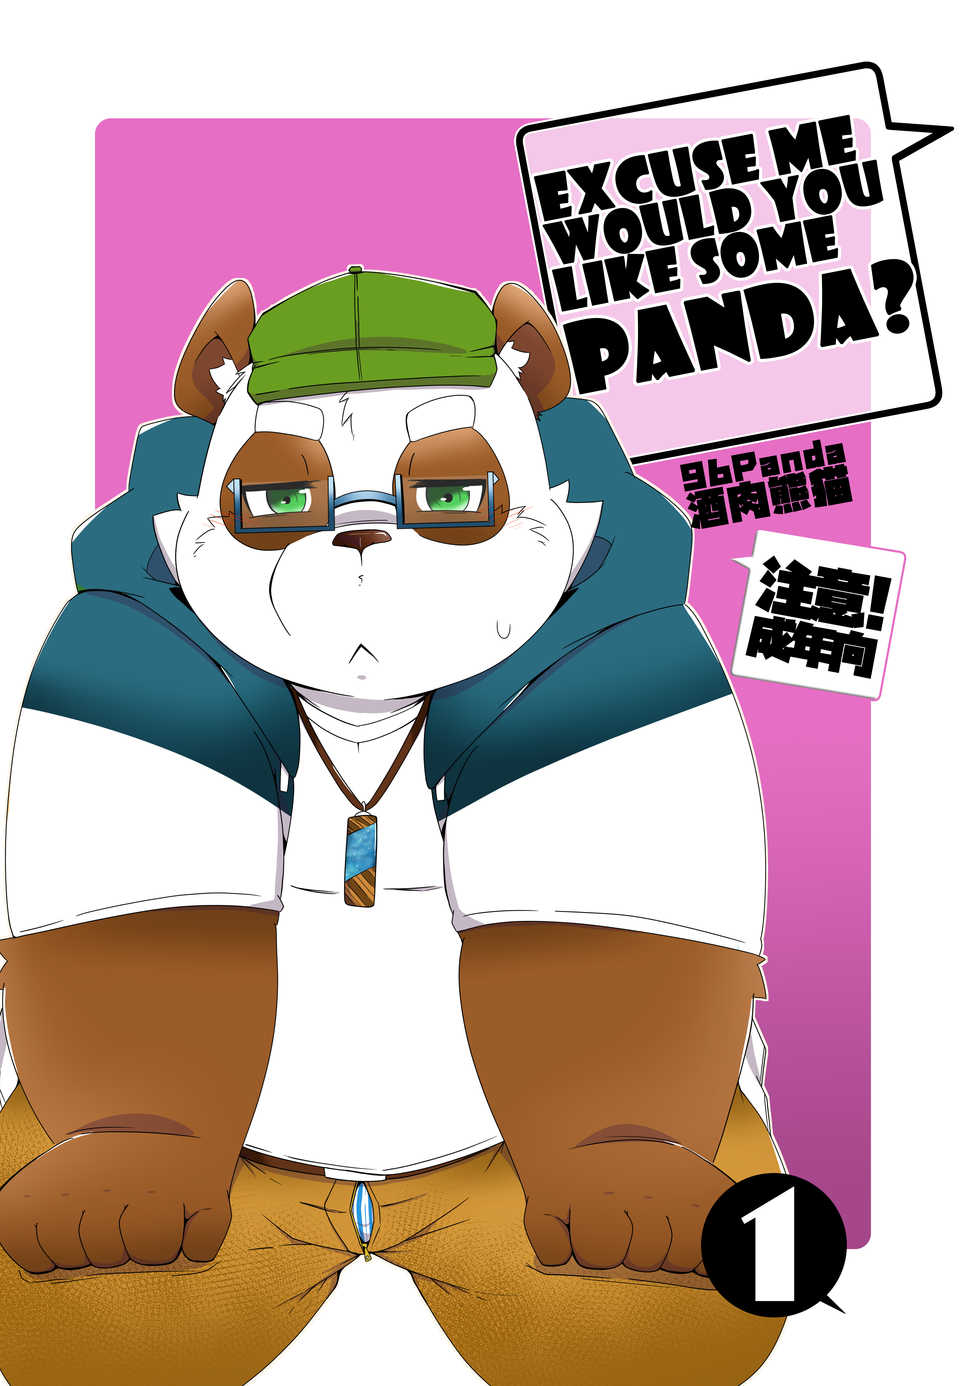 [96Panda] EXCUSE ME WOULD YOU LIKE SOME PANDA? - Page 1